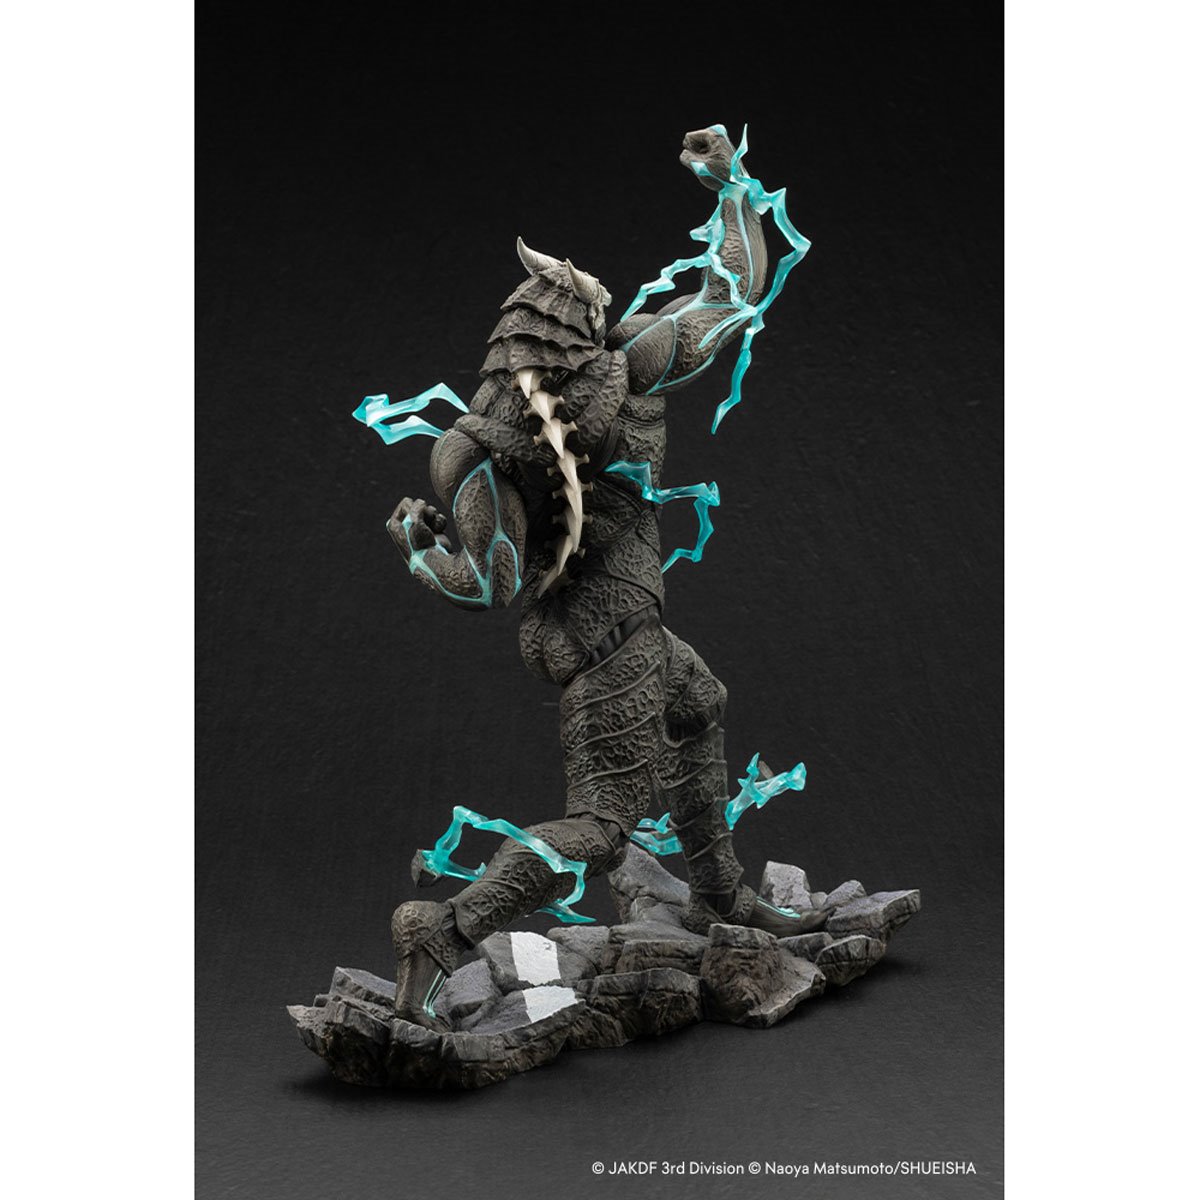 Kaiju No. 8 ARTFX J 1:8 Scale Statue